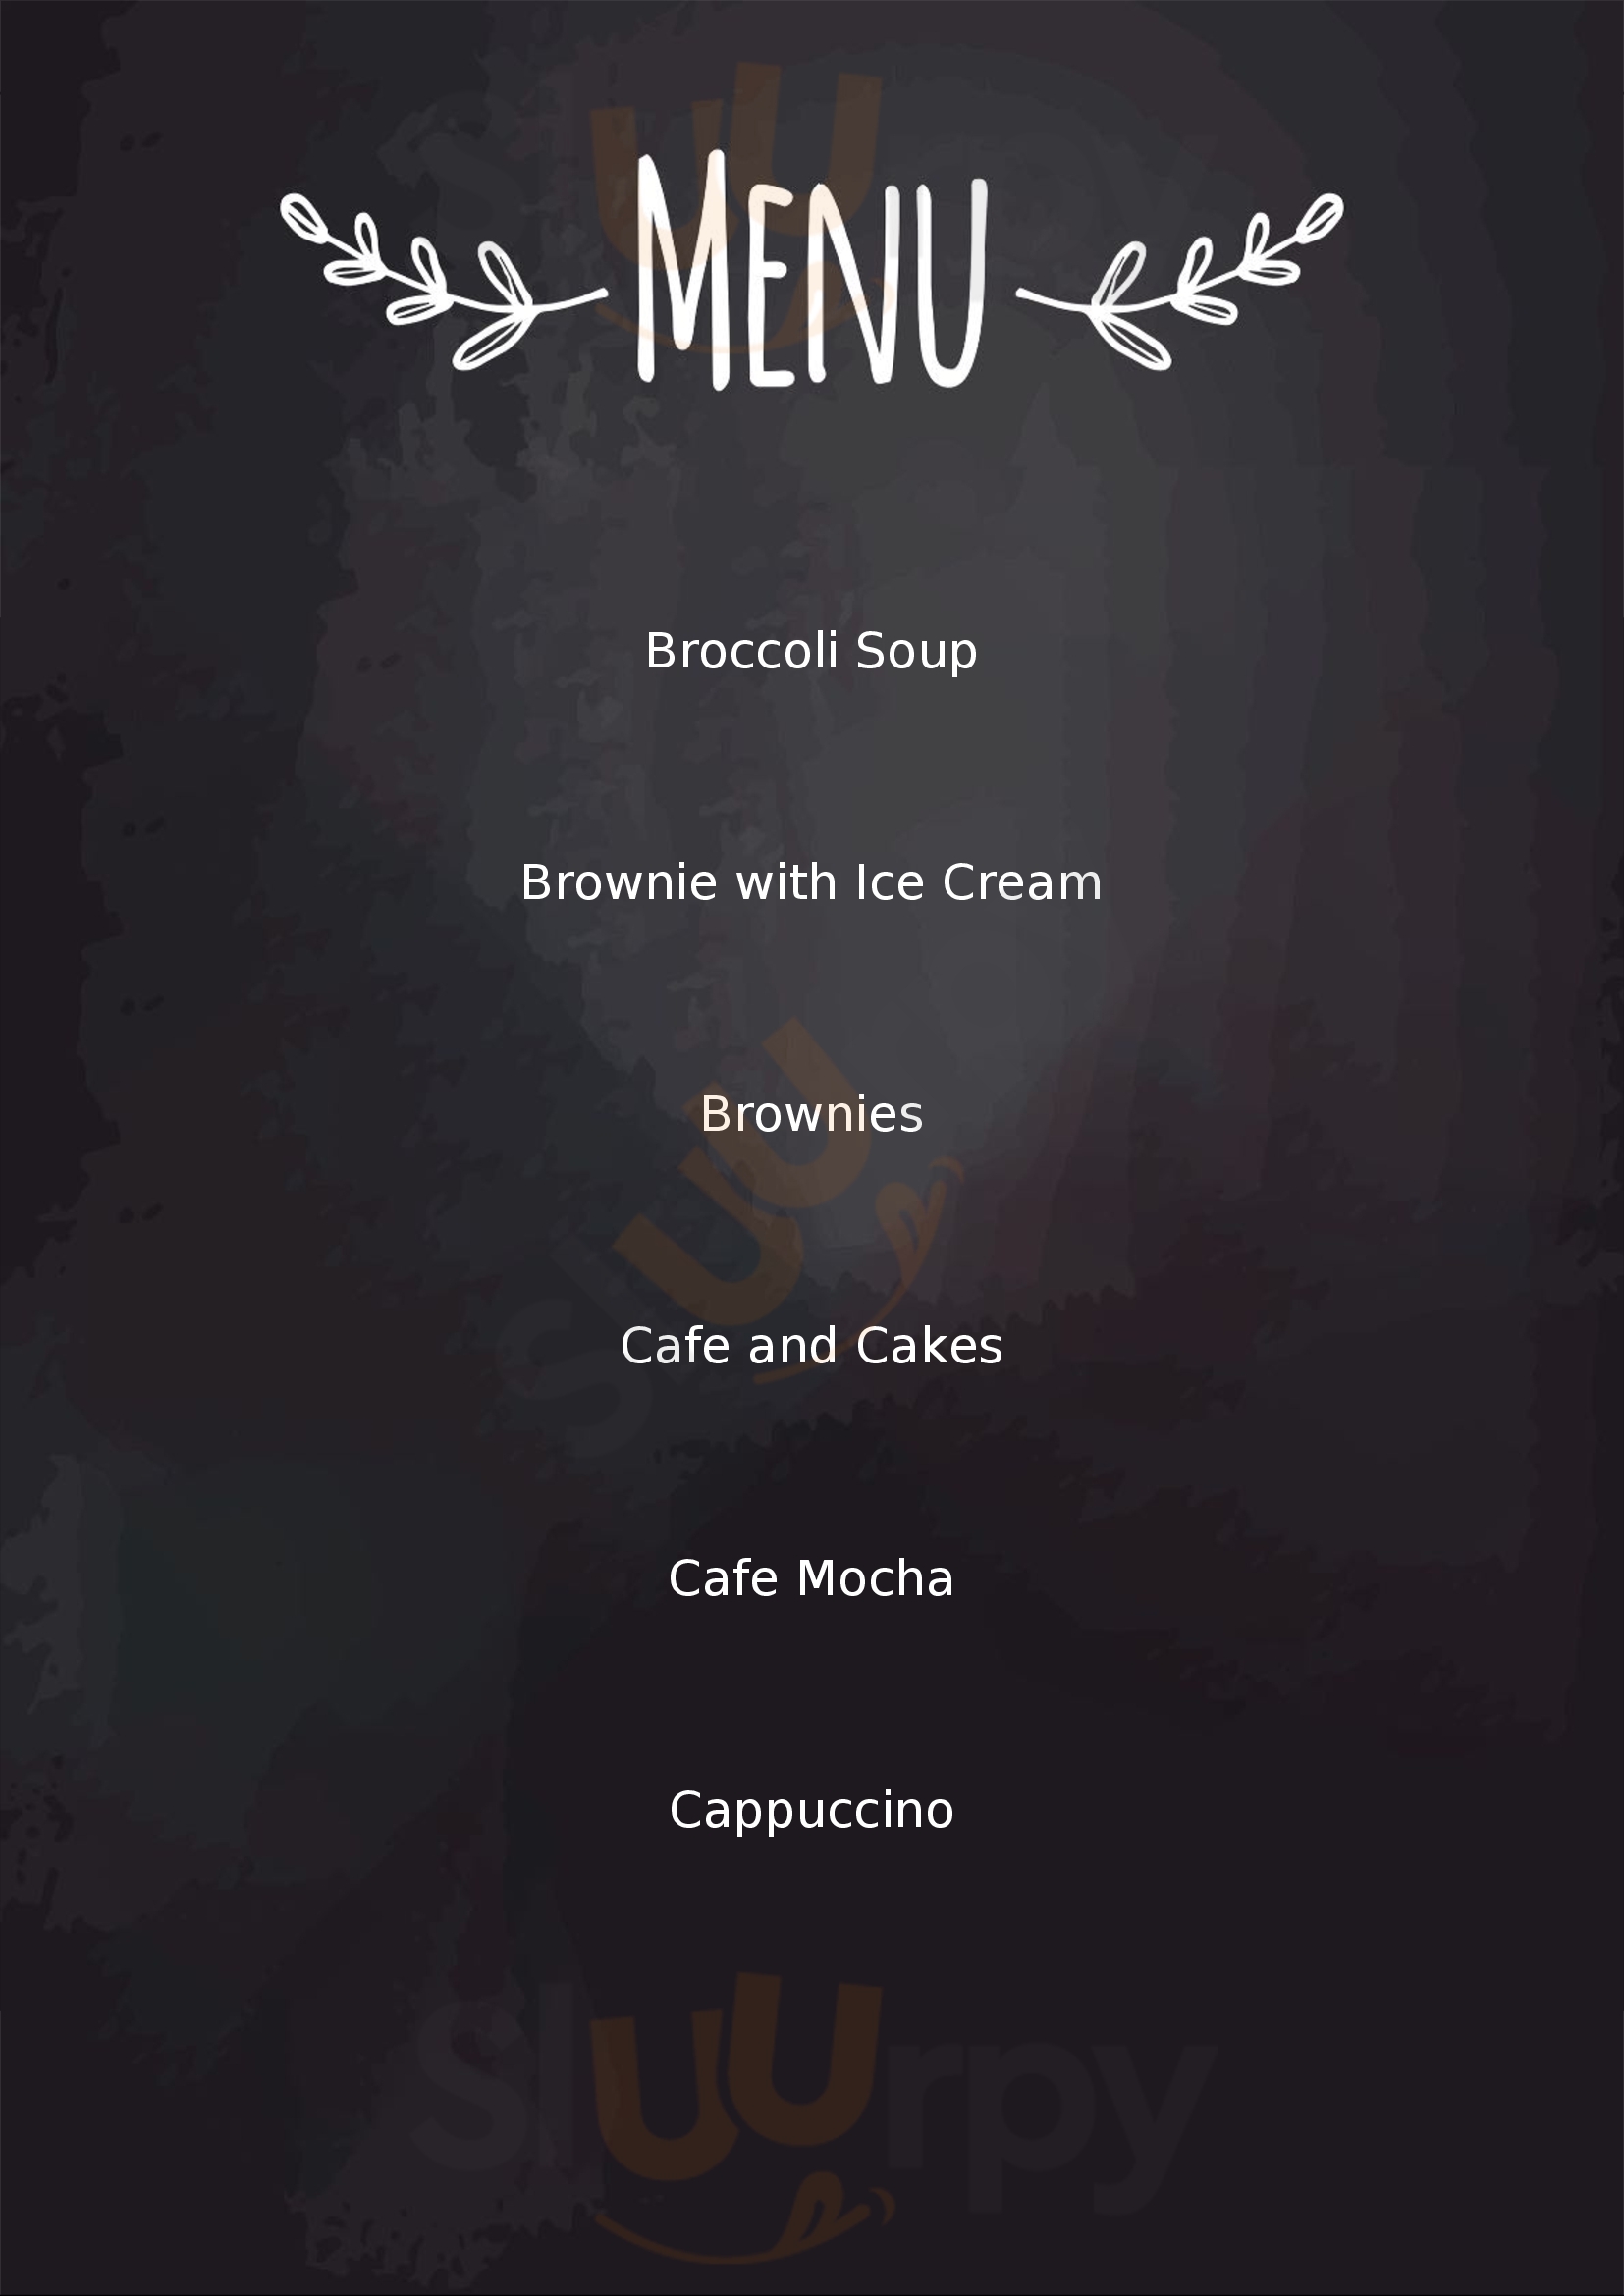 Hifive Cafe Coimbatore Menu - 1